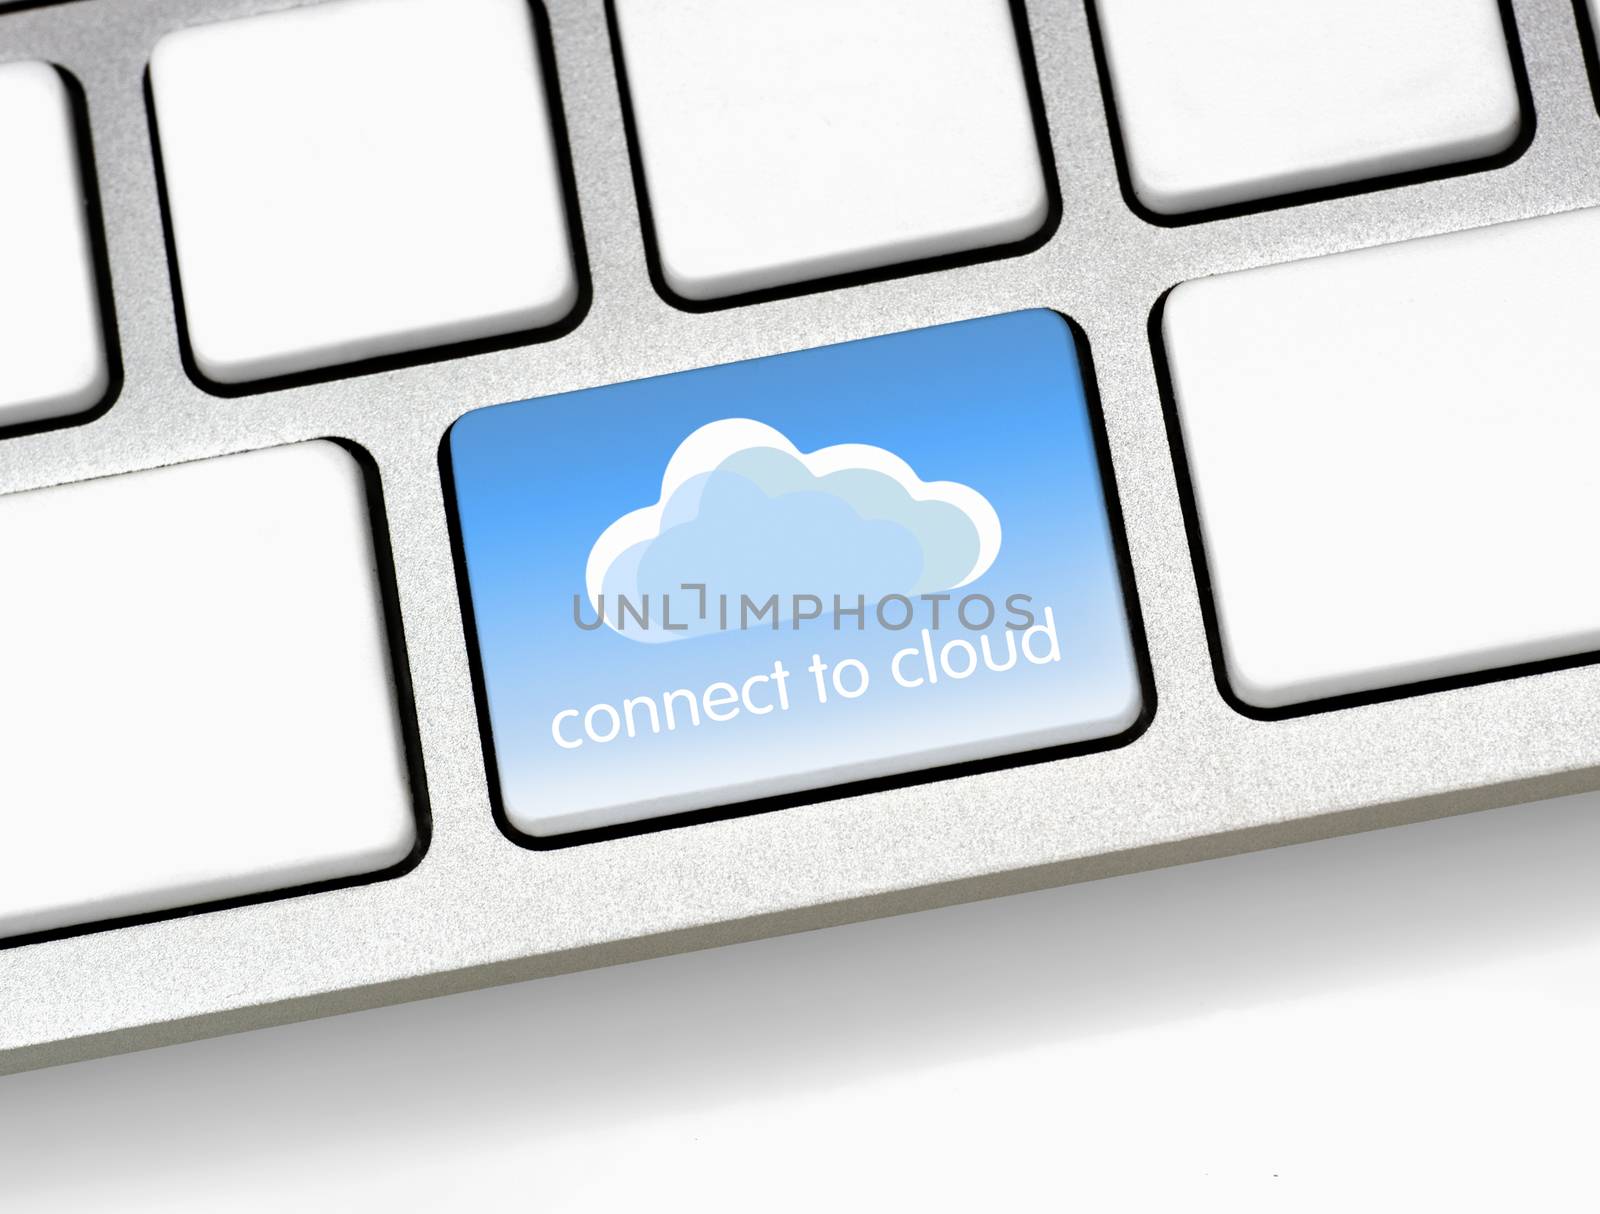 keyboard layout for cloud computing